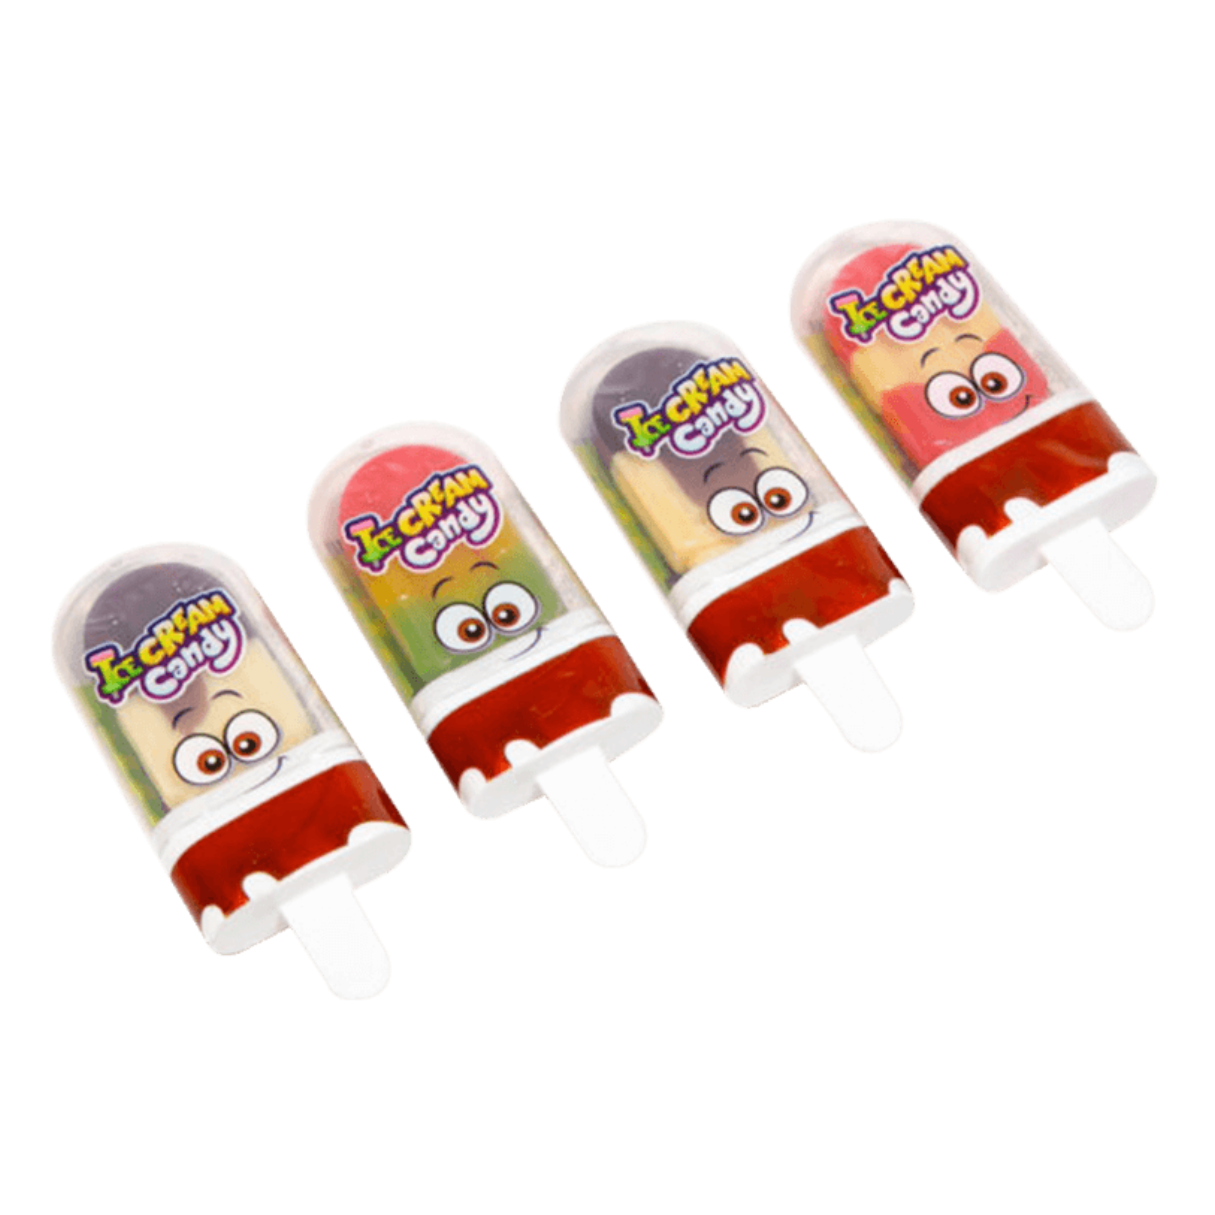 Raindrops Ice Cream Candy Pop .88oz -96ct